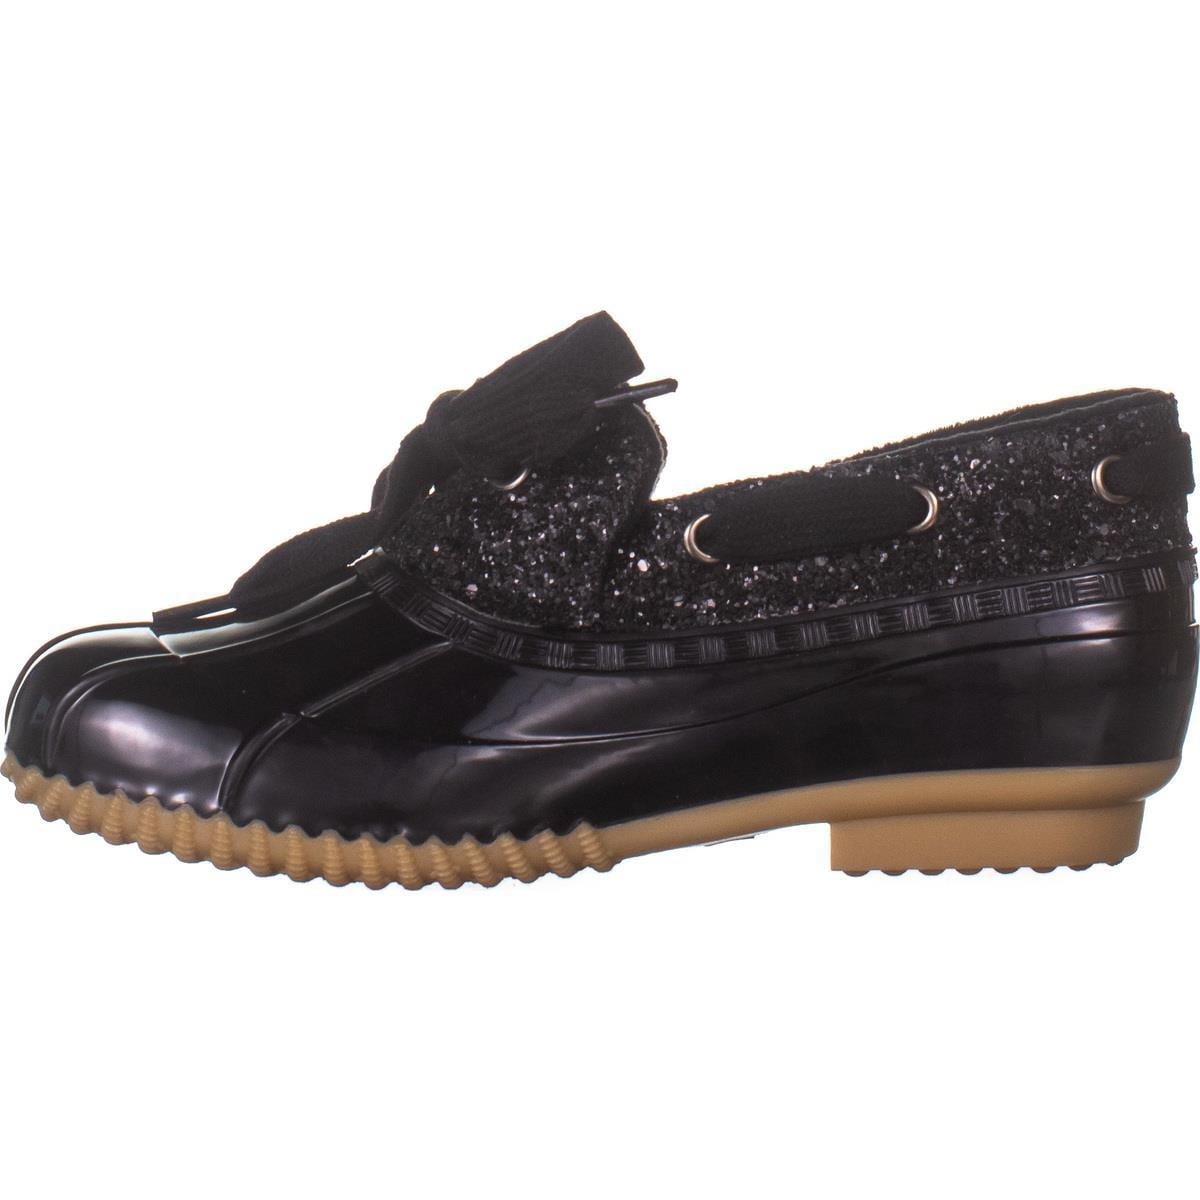 black glitter duck boots